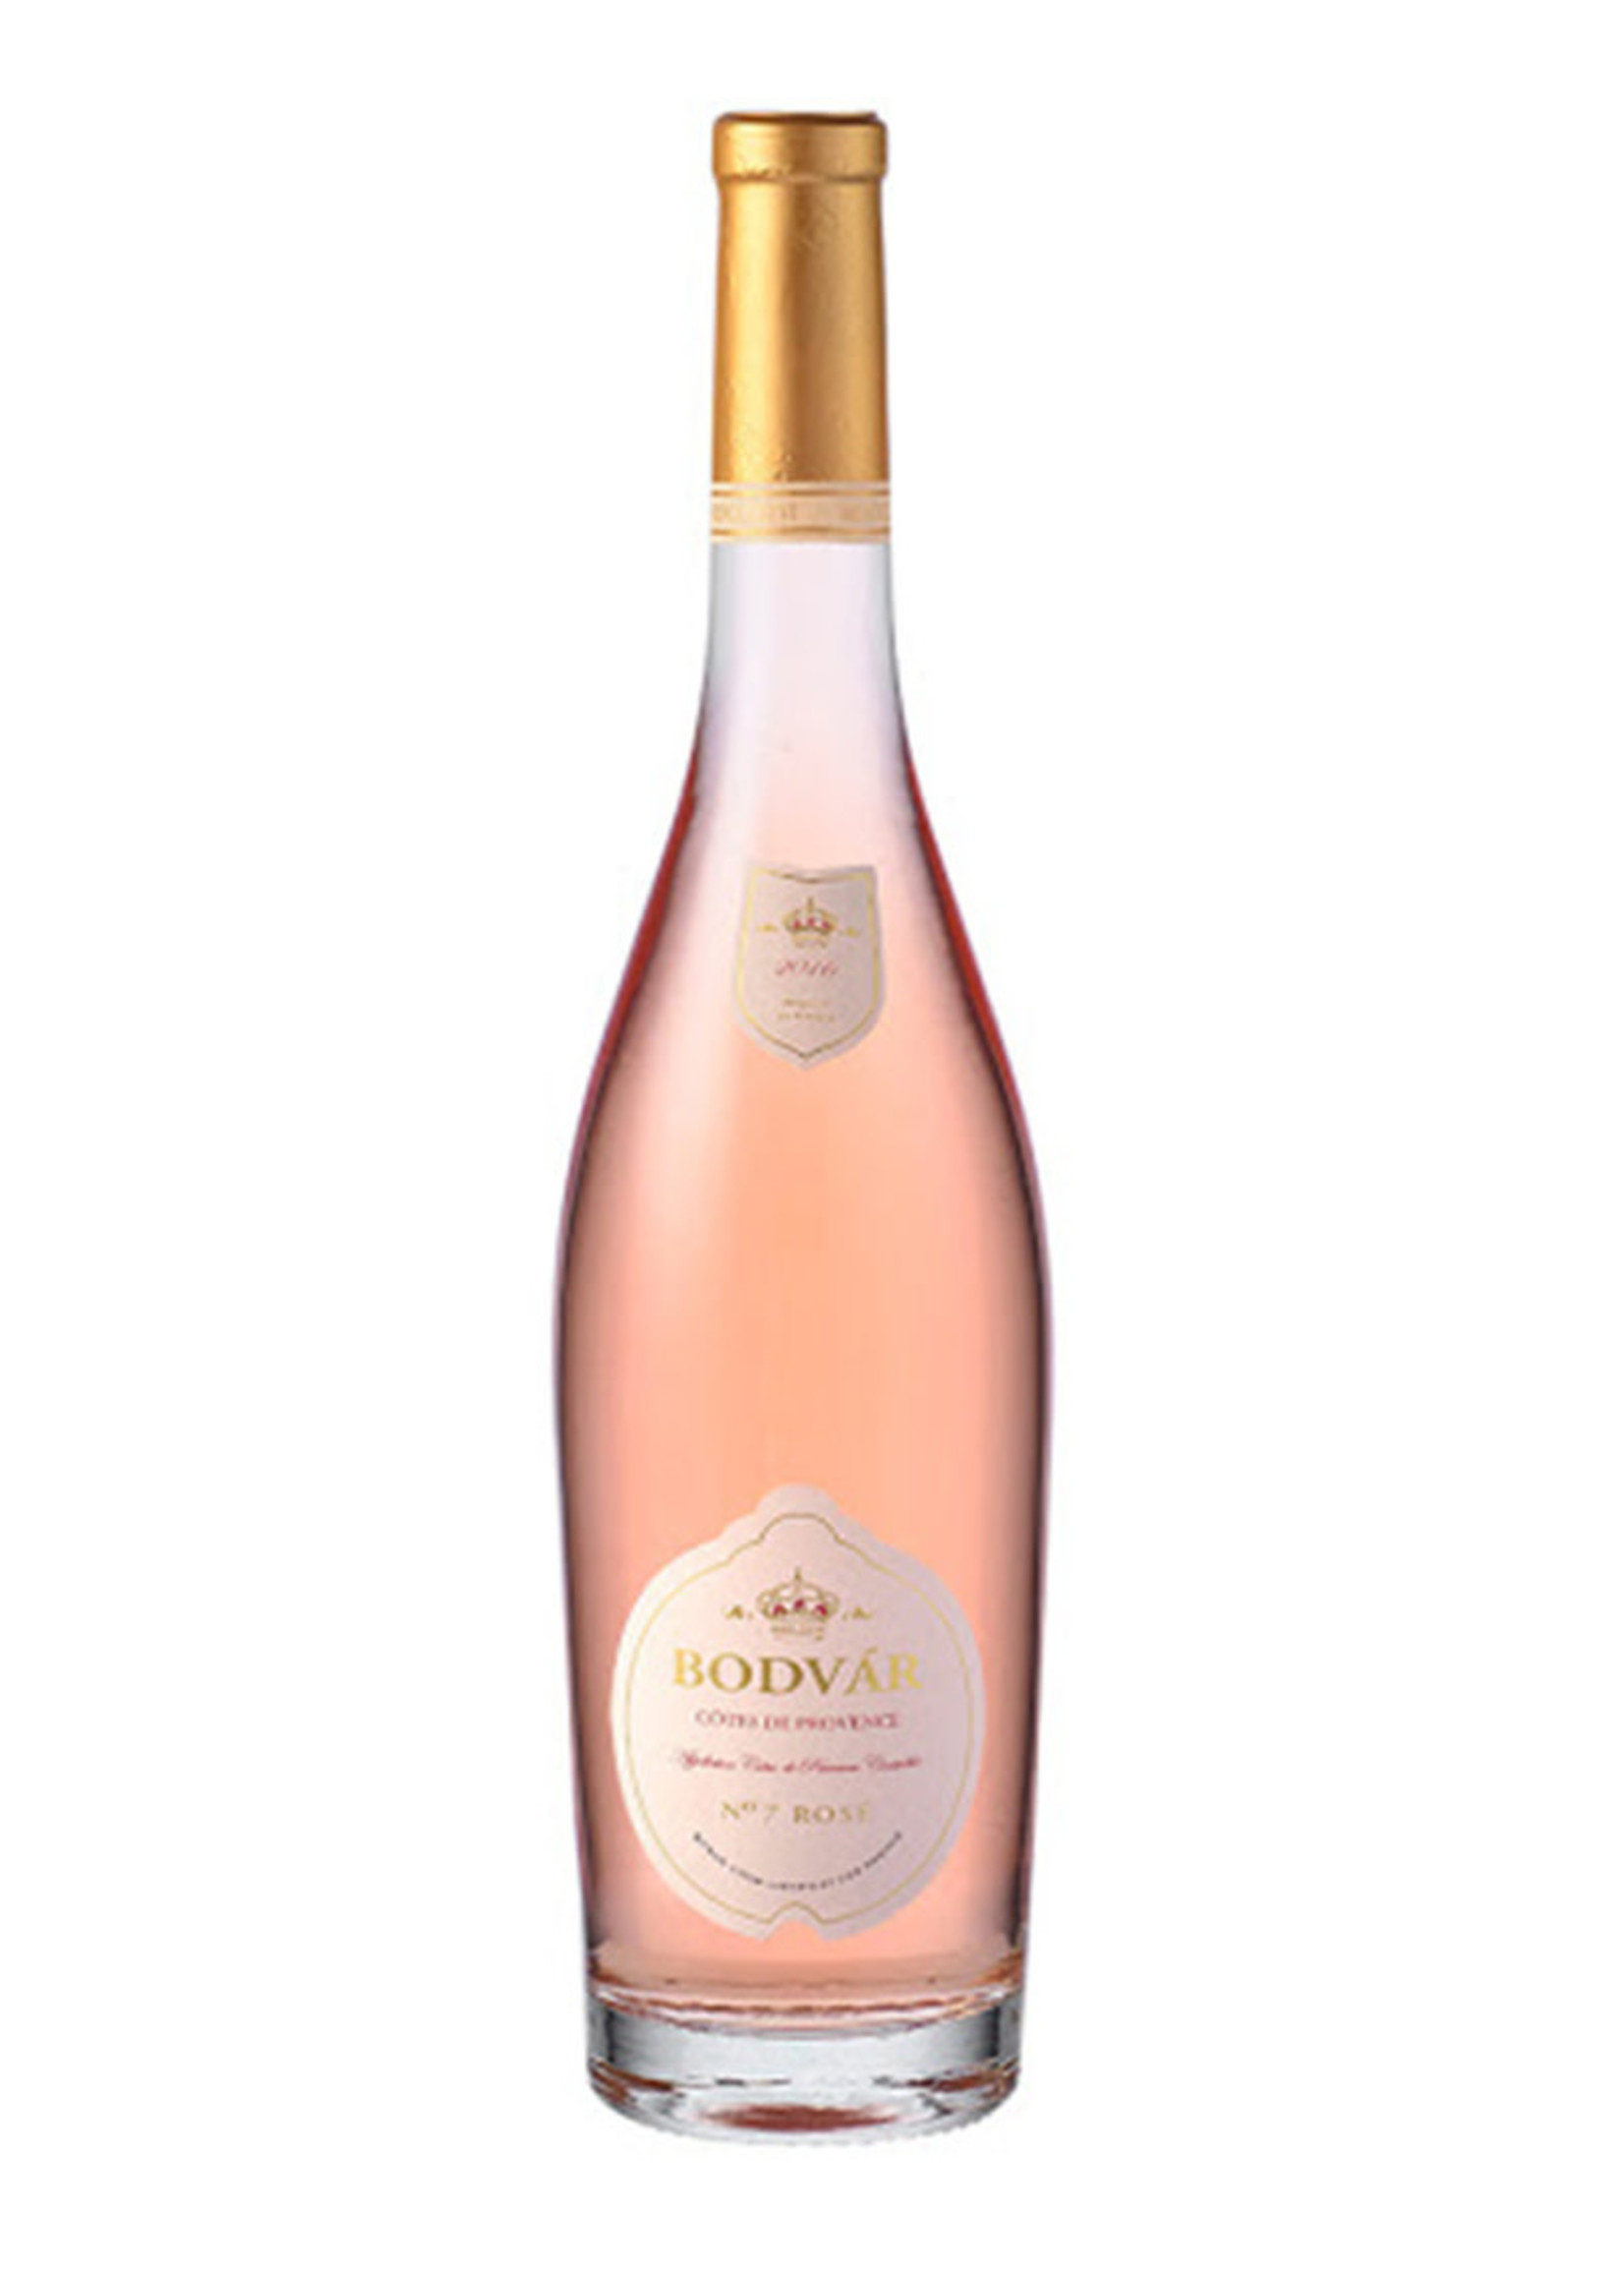 Bodvar 2019 No. 7 Rosé, Côtes de Provence, France